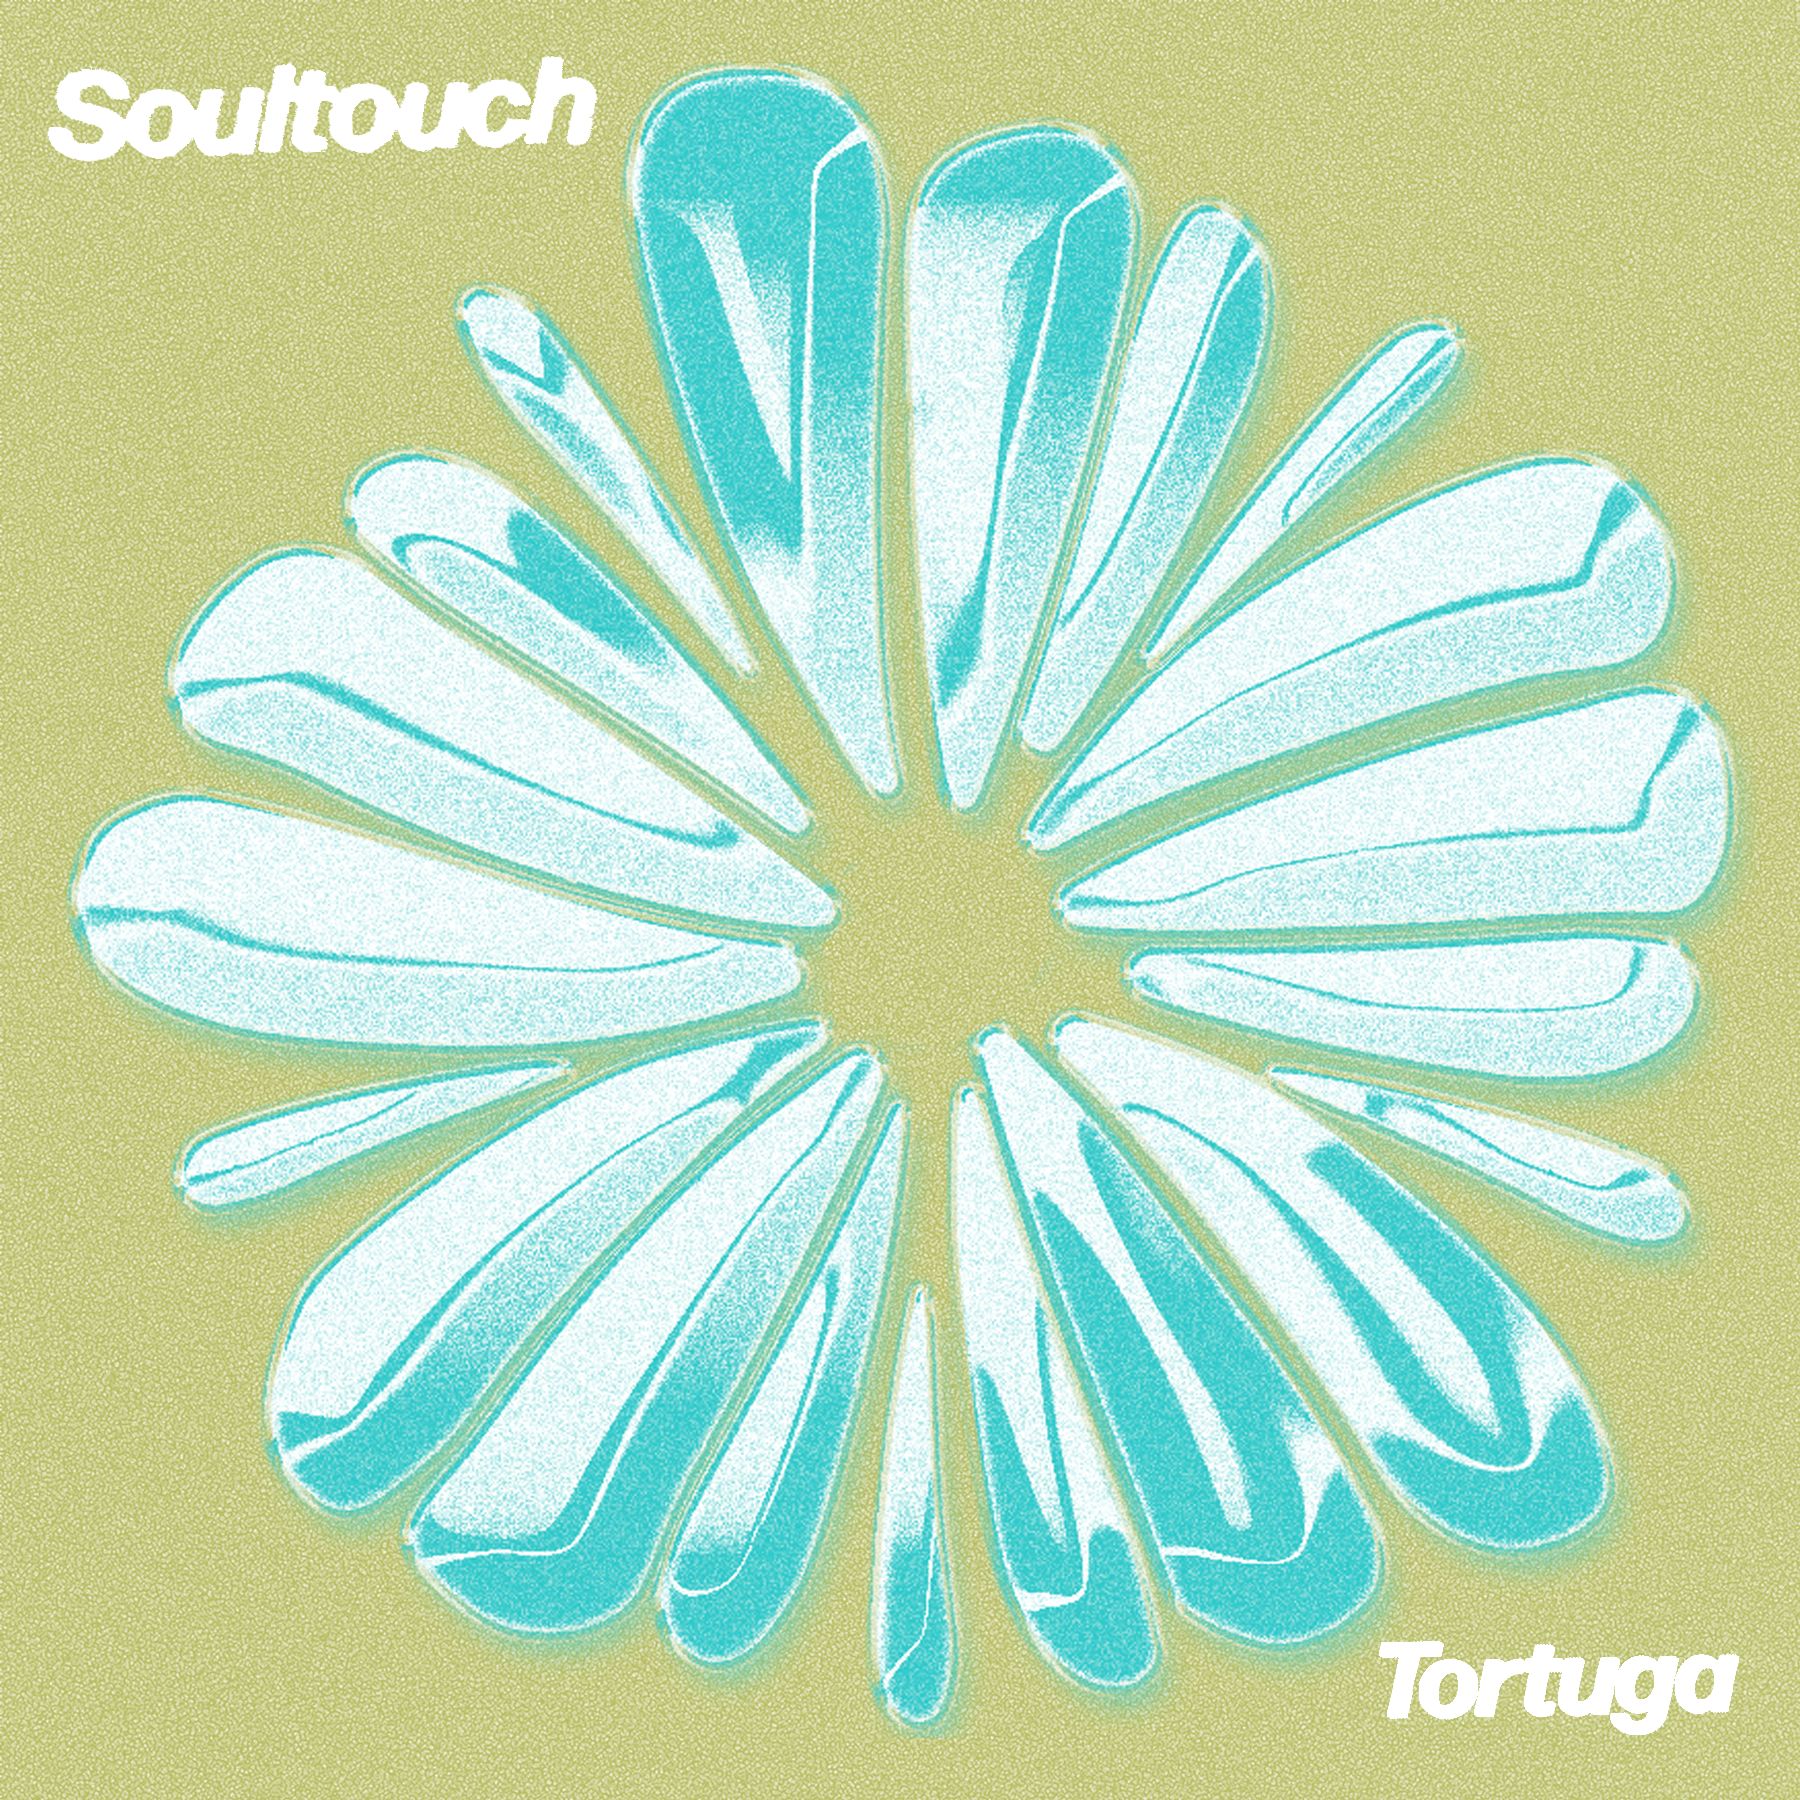 Татаж авах PREMIERE : Tortuga - Soultouch